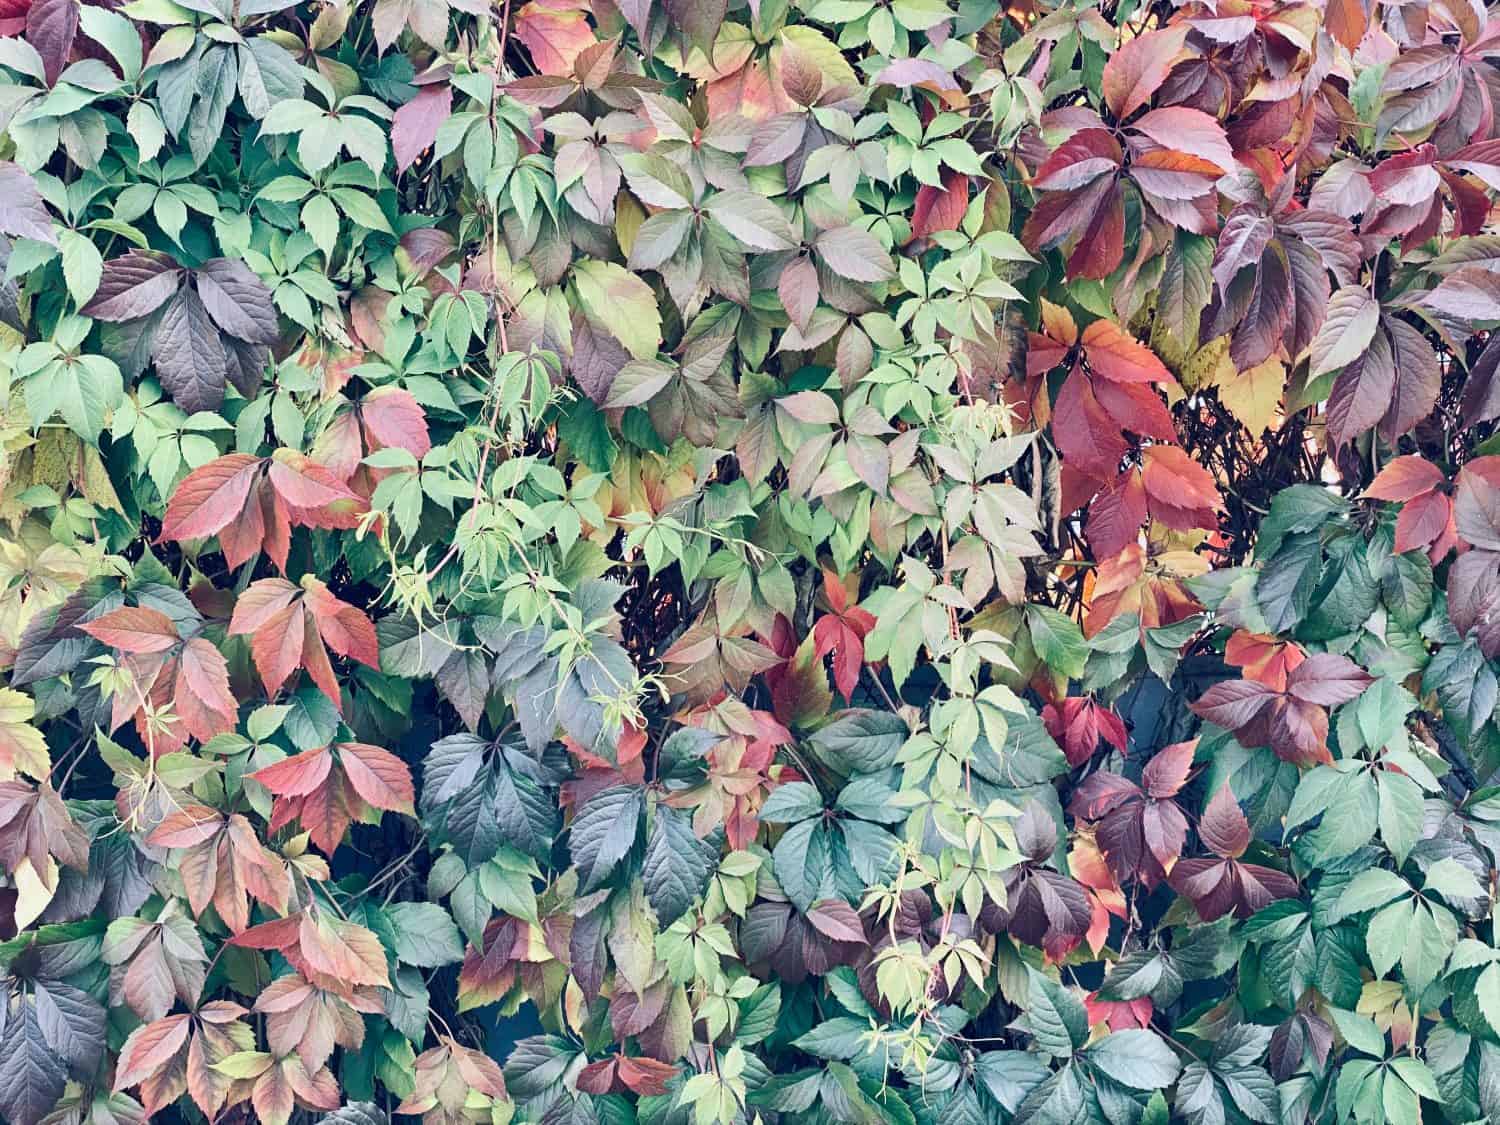 Colorful Virginia creeper on the wall in autumn season.